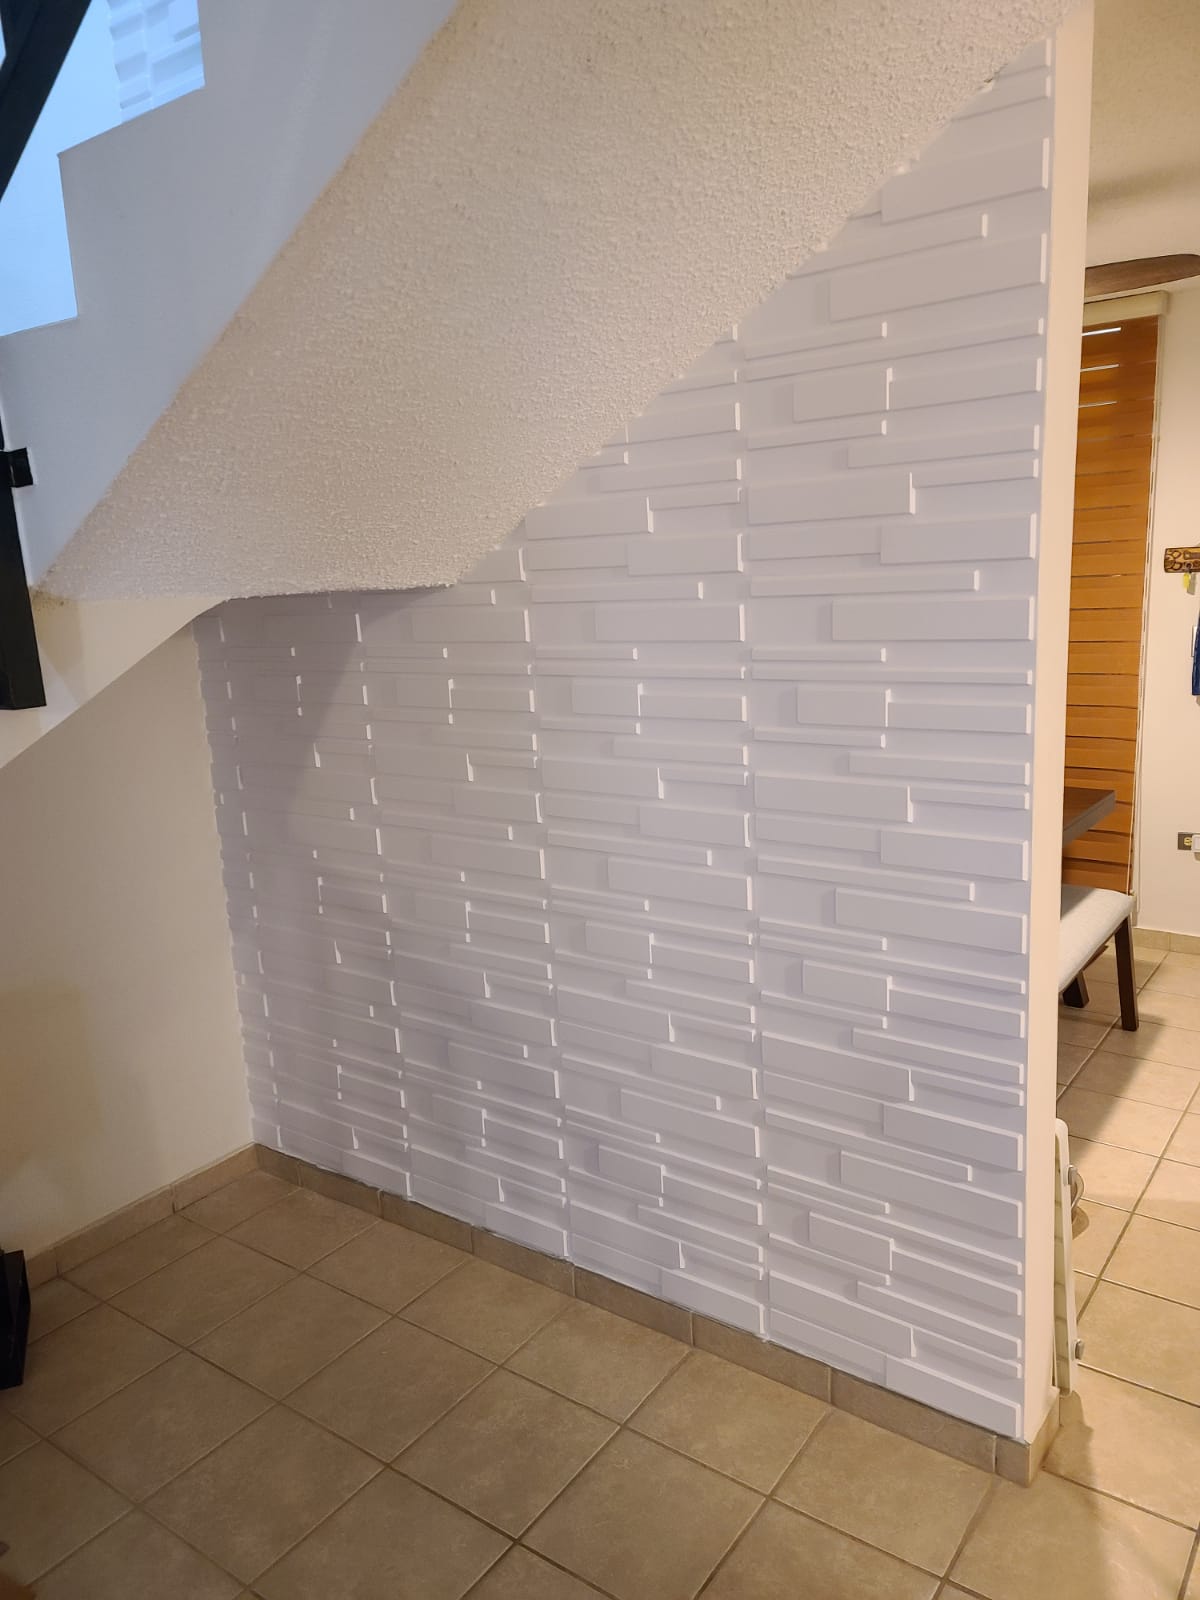 Modelo Tiles 3D Walls PR